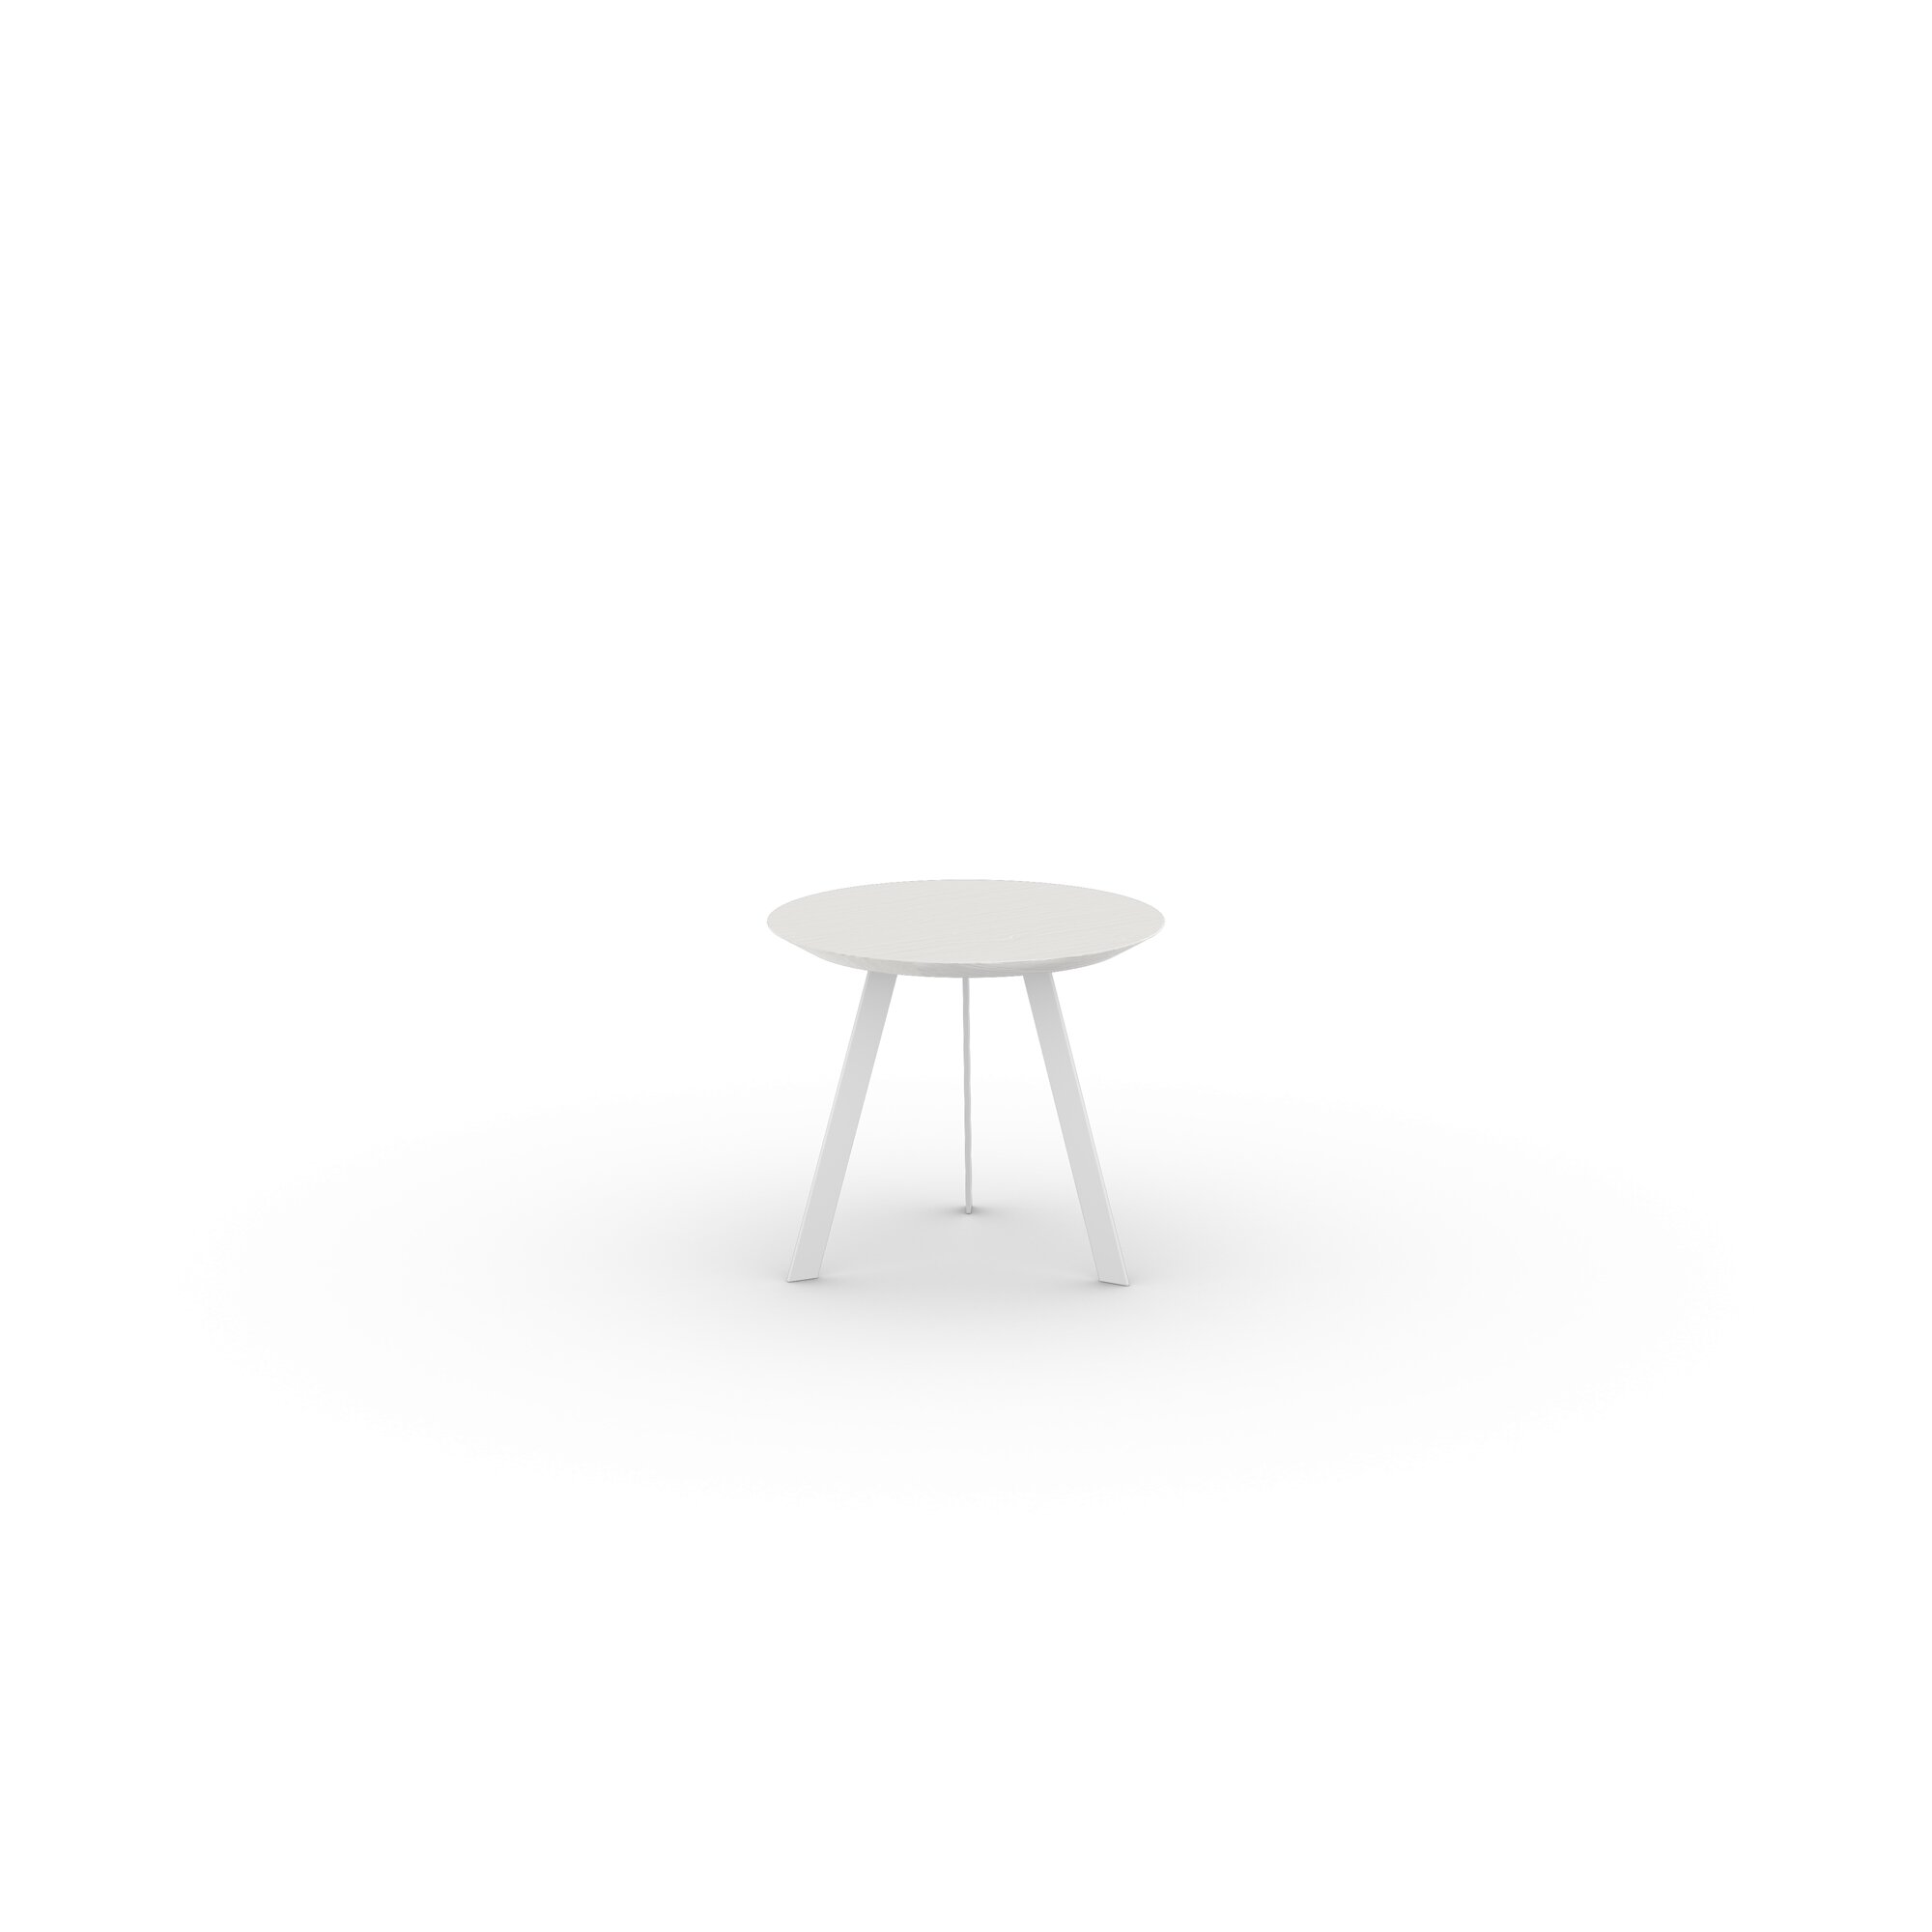 Design Coffee Table | New Co Coffee Table 50 Round White | Oak white lacquer | Studio HENK| 